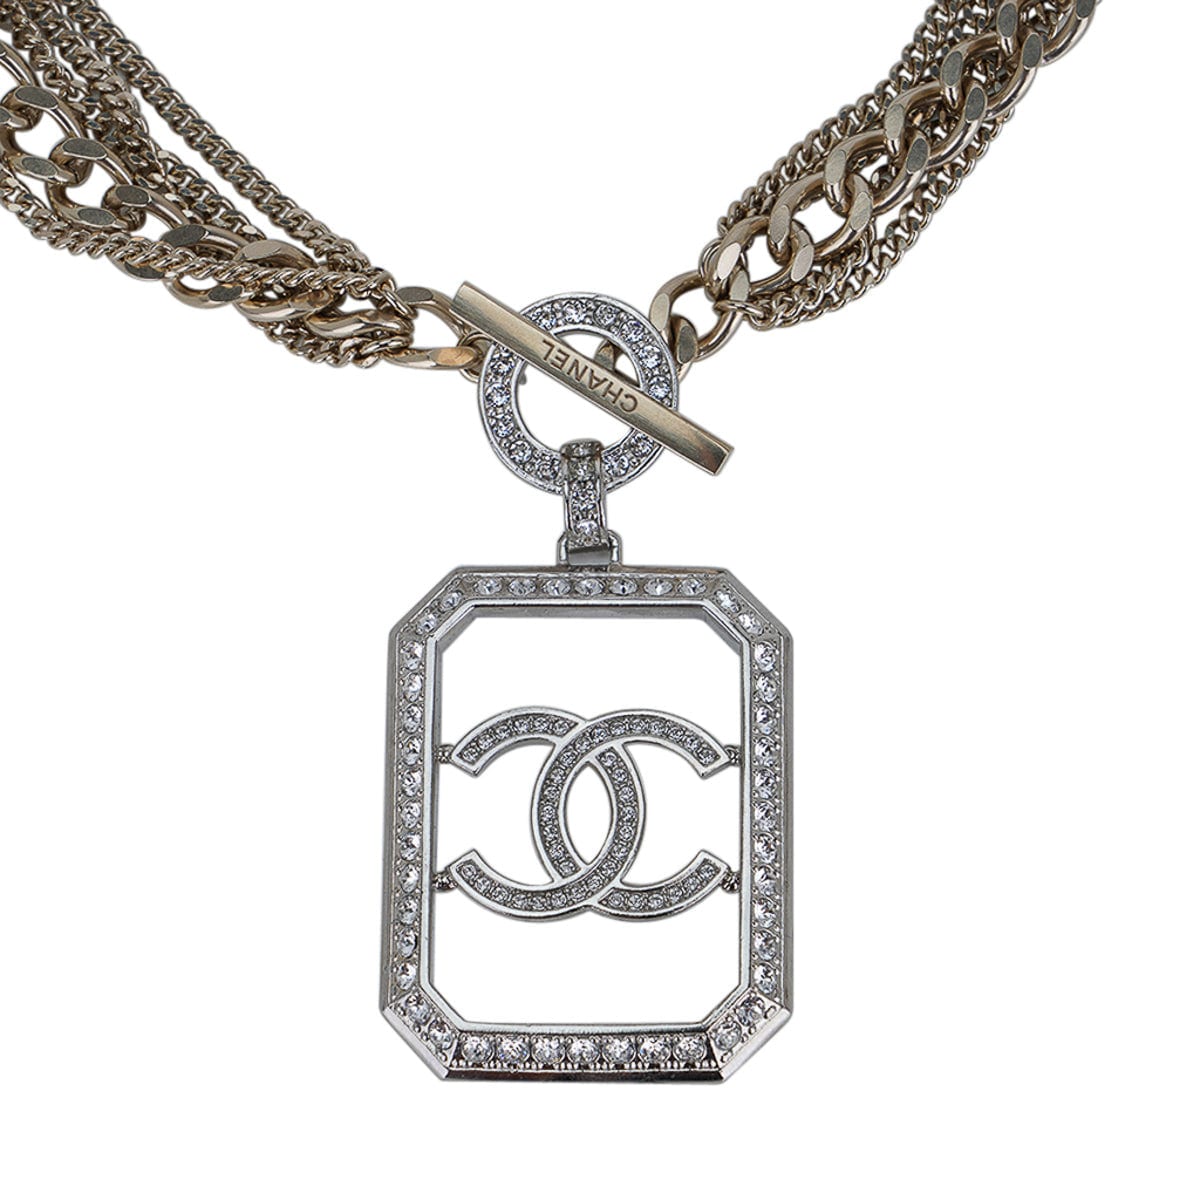 Vintage Chanel Oval CC Pendant Chain Necklace